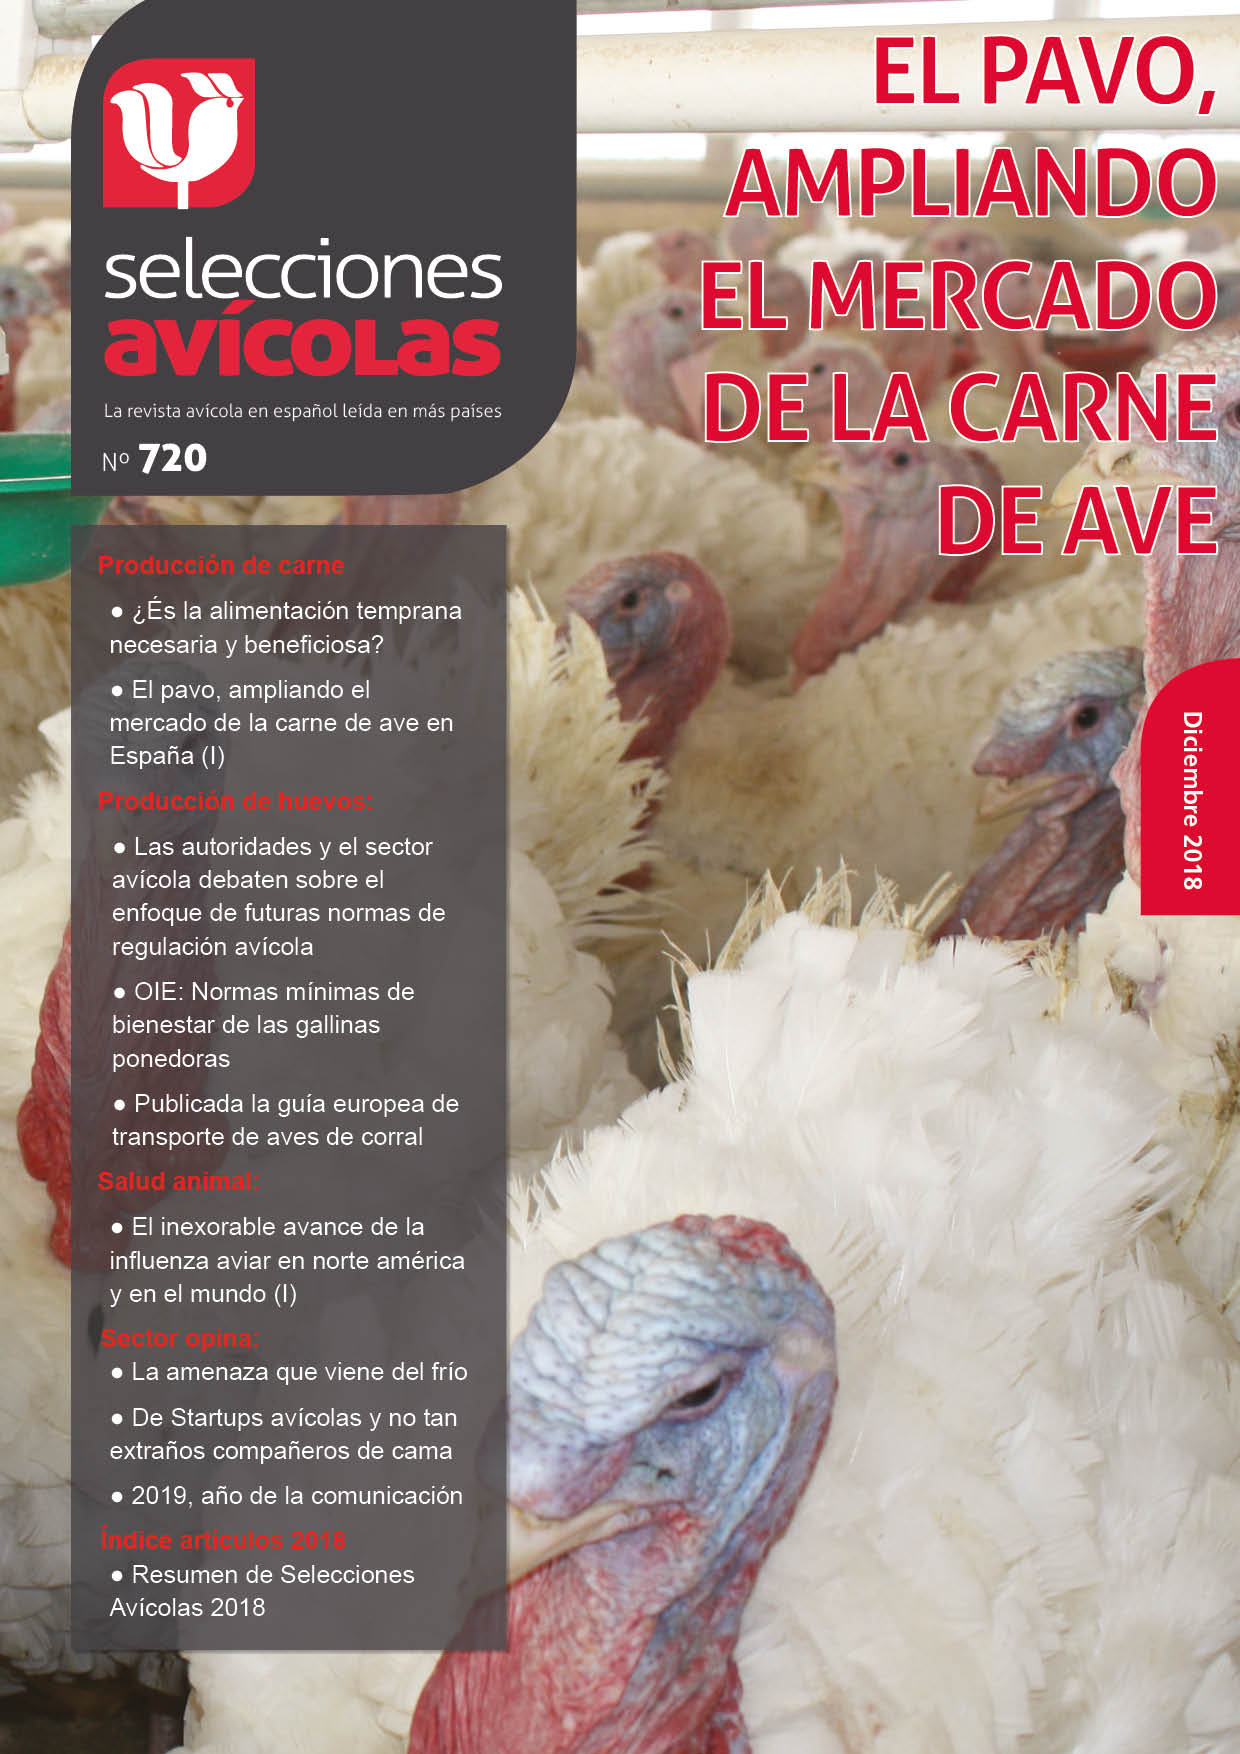 01_portada_el_pavo_ampliando_mercado_carne_ave_SA201812.jpg